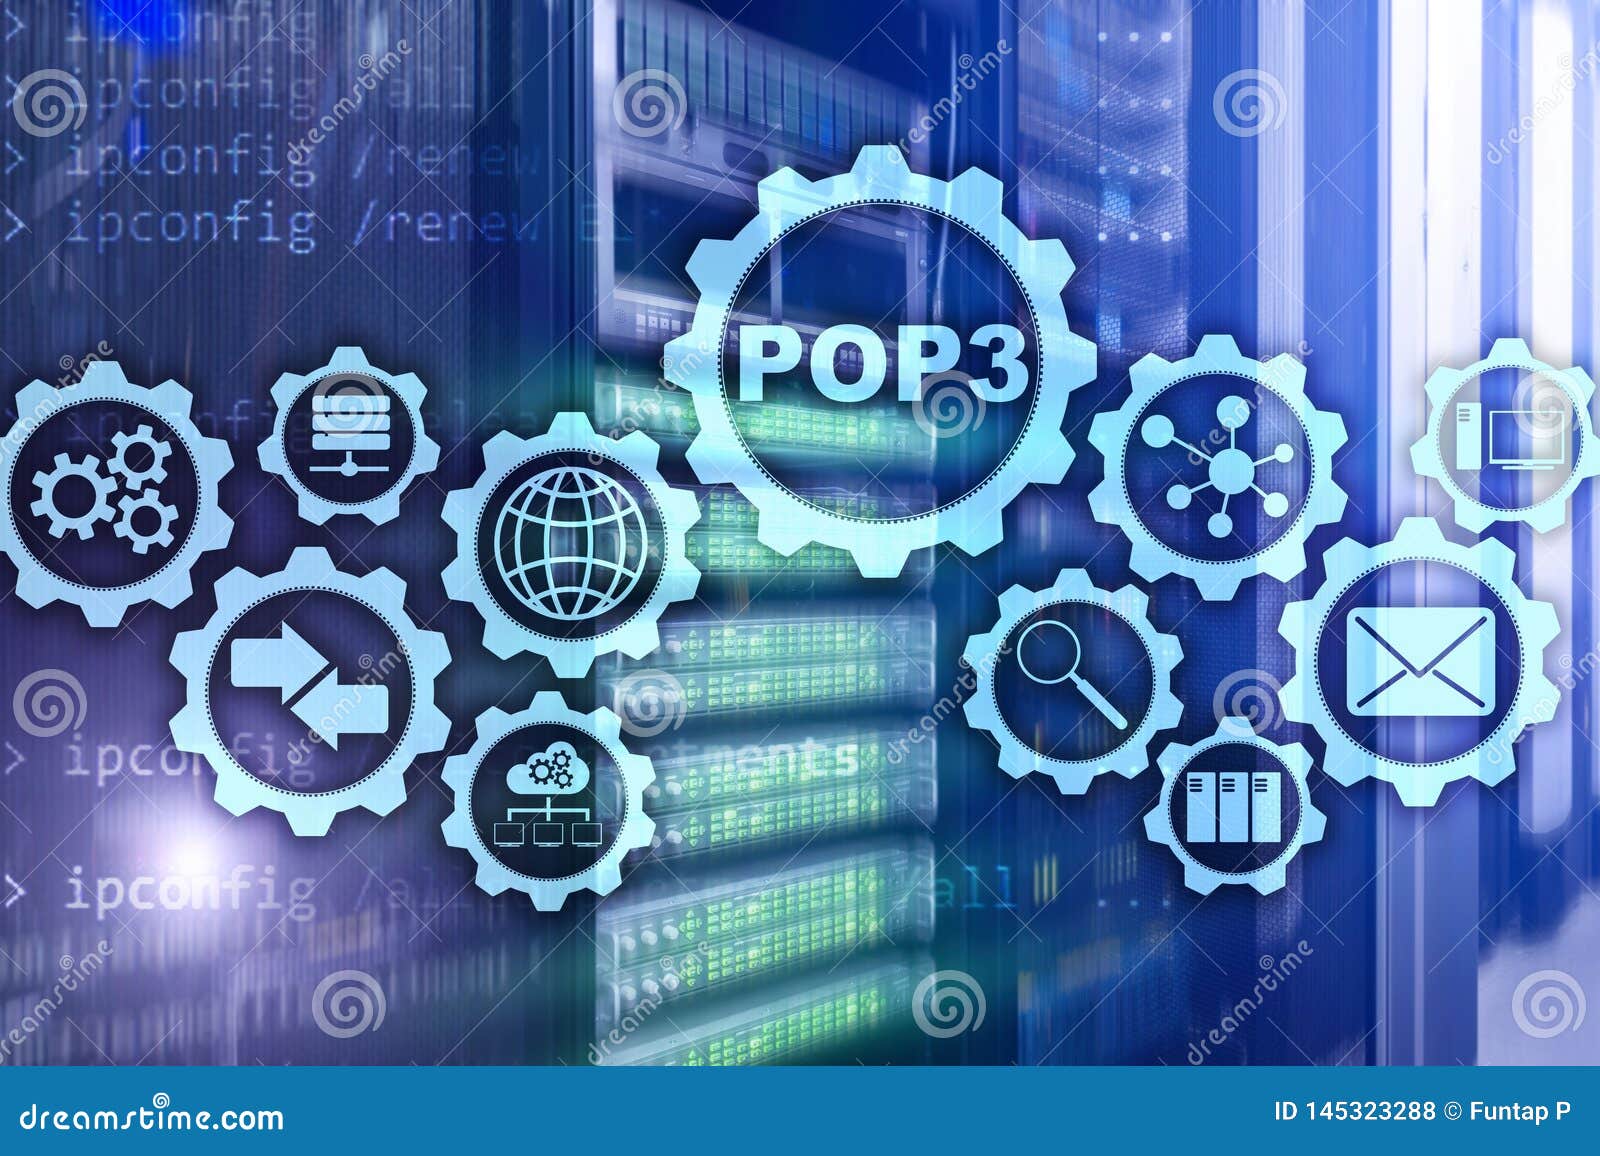 POP3. Post Office Protocol Version 3. Standard Internet Protocol on  Datacenter Background. Stock Photo - Image of network, post: 145323288